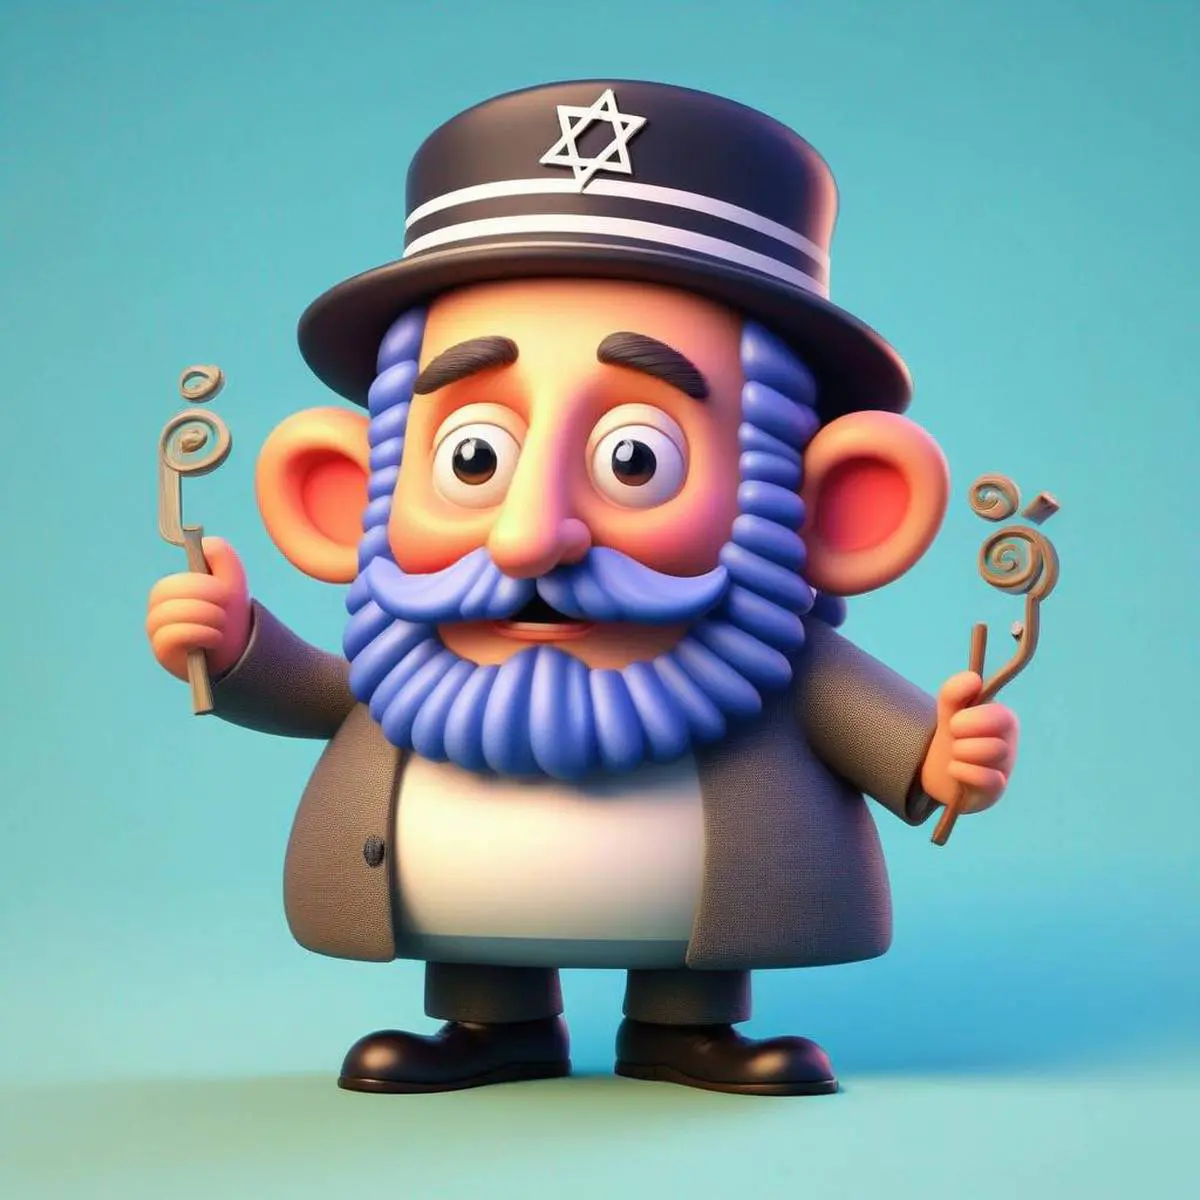 Jewish puns